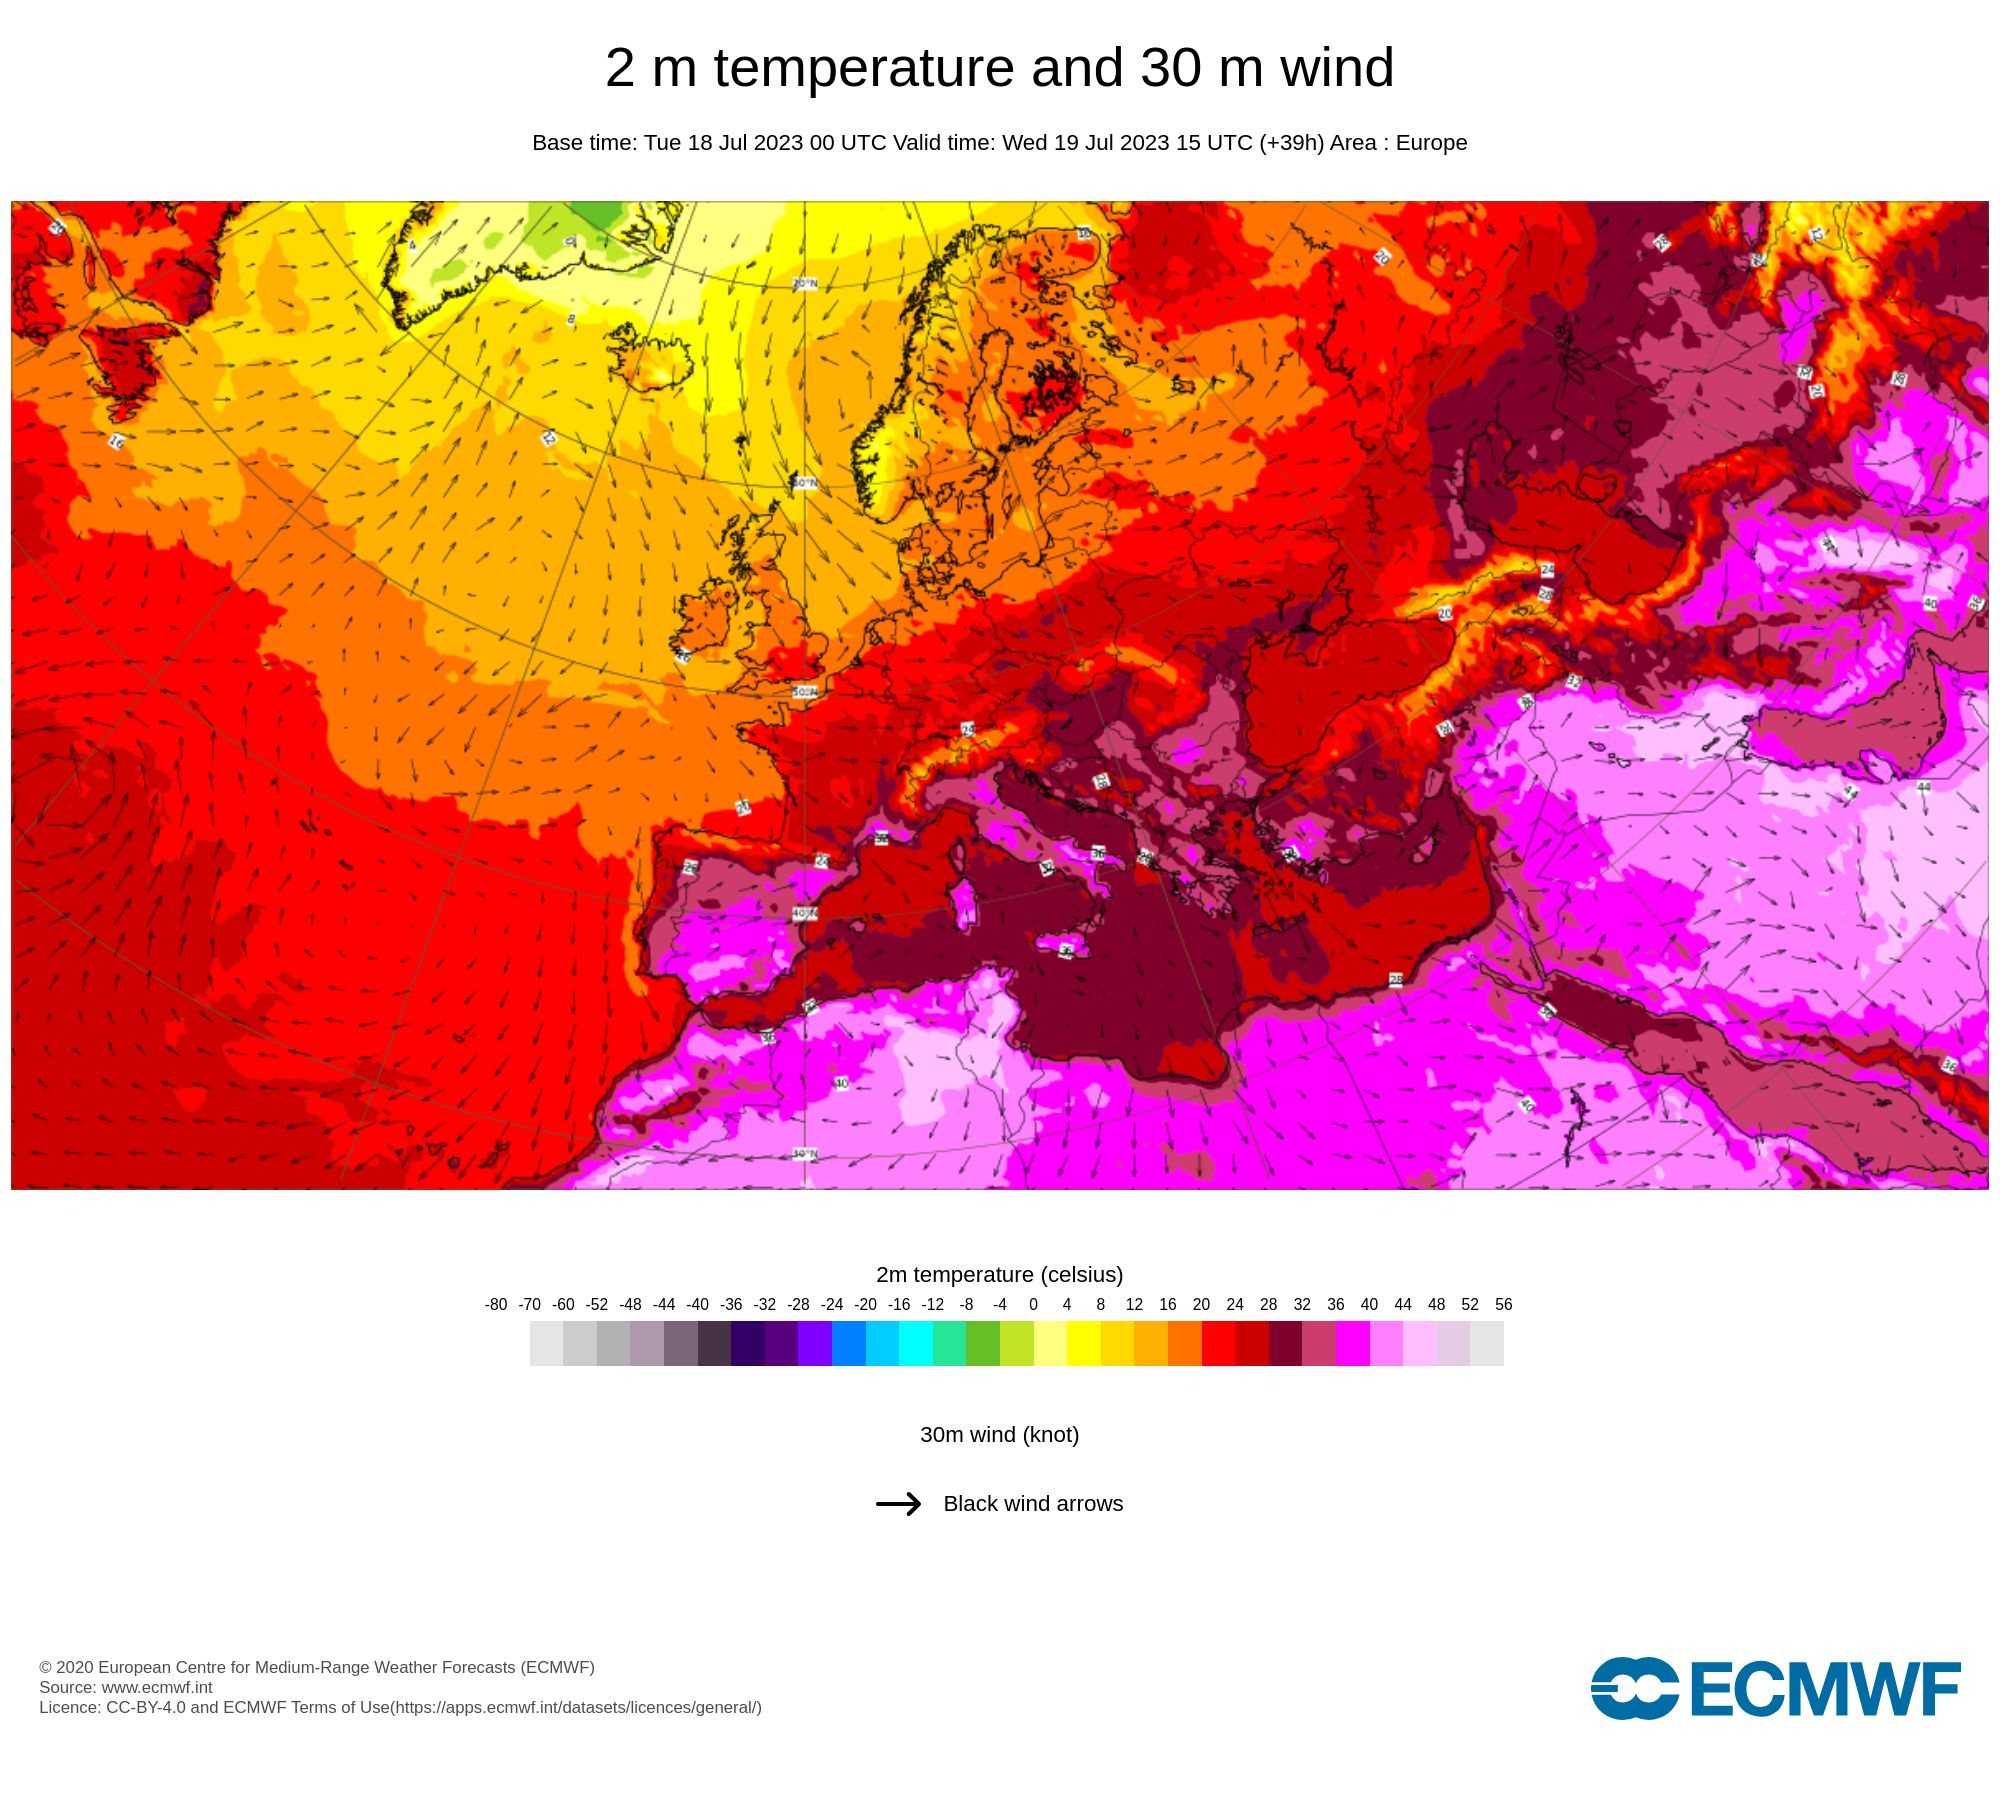 19 de julho de 2023: temperaturas às 16 horas (em Portugal continental)